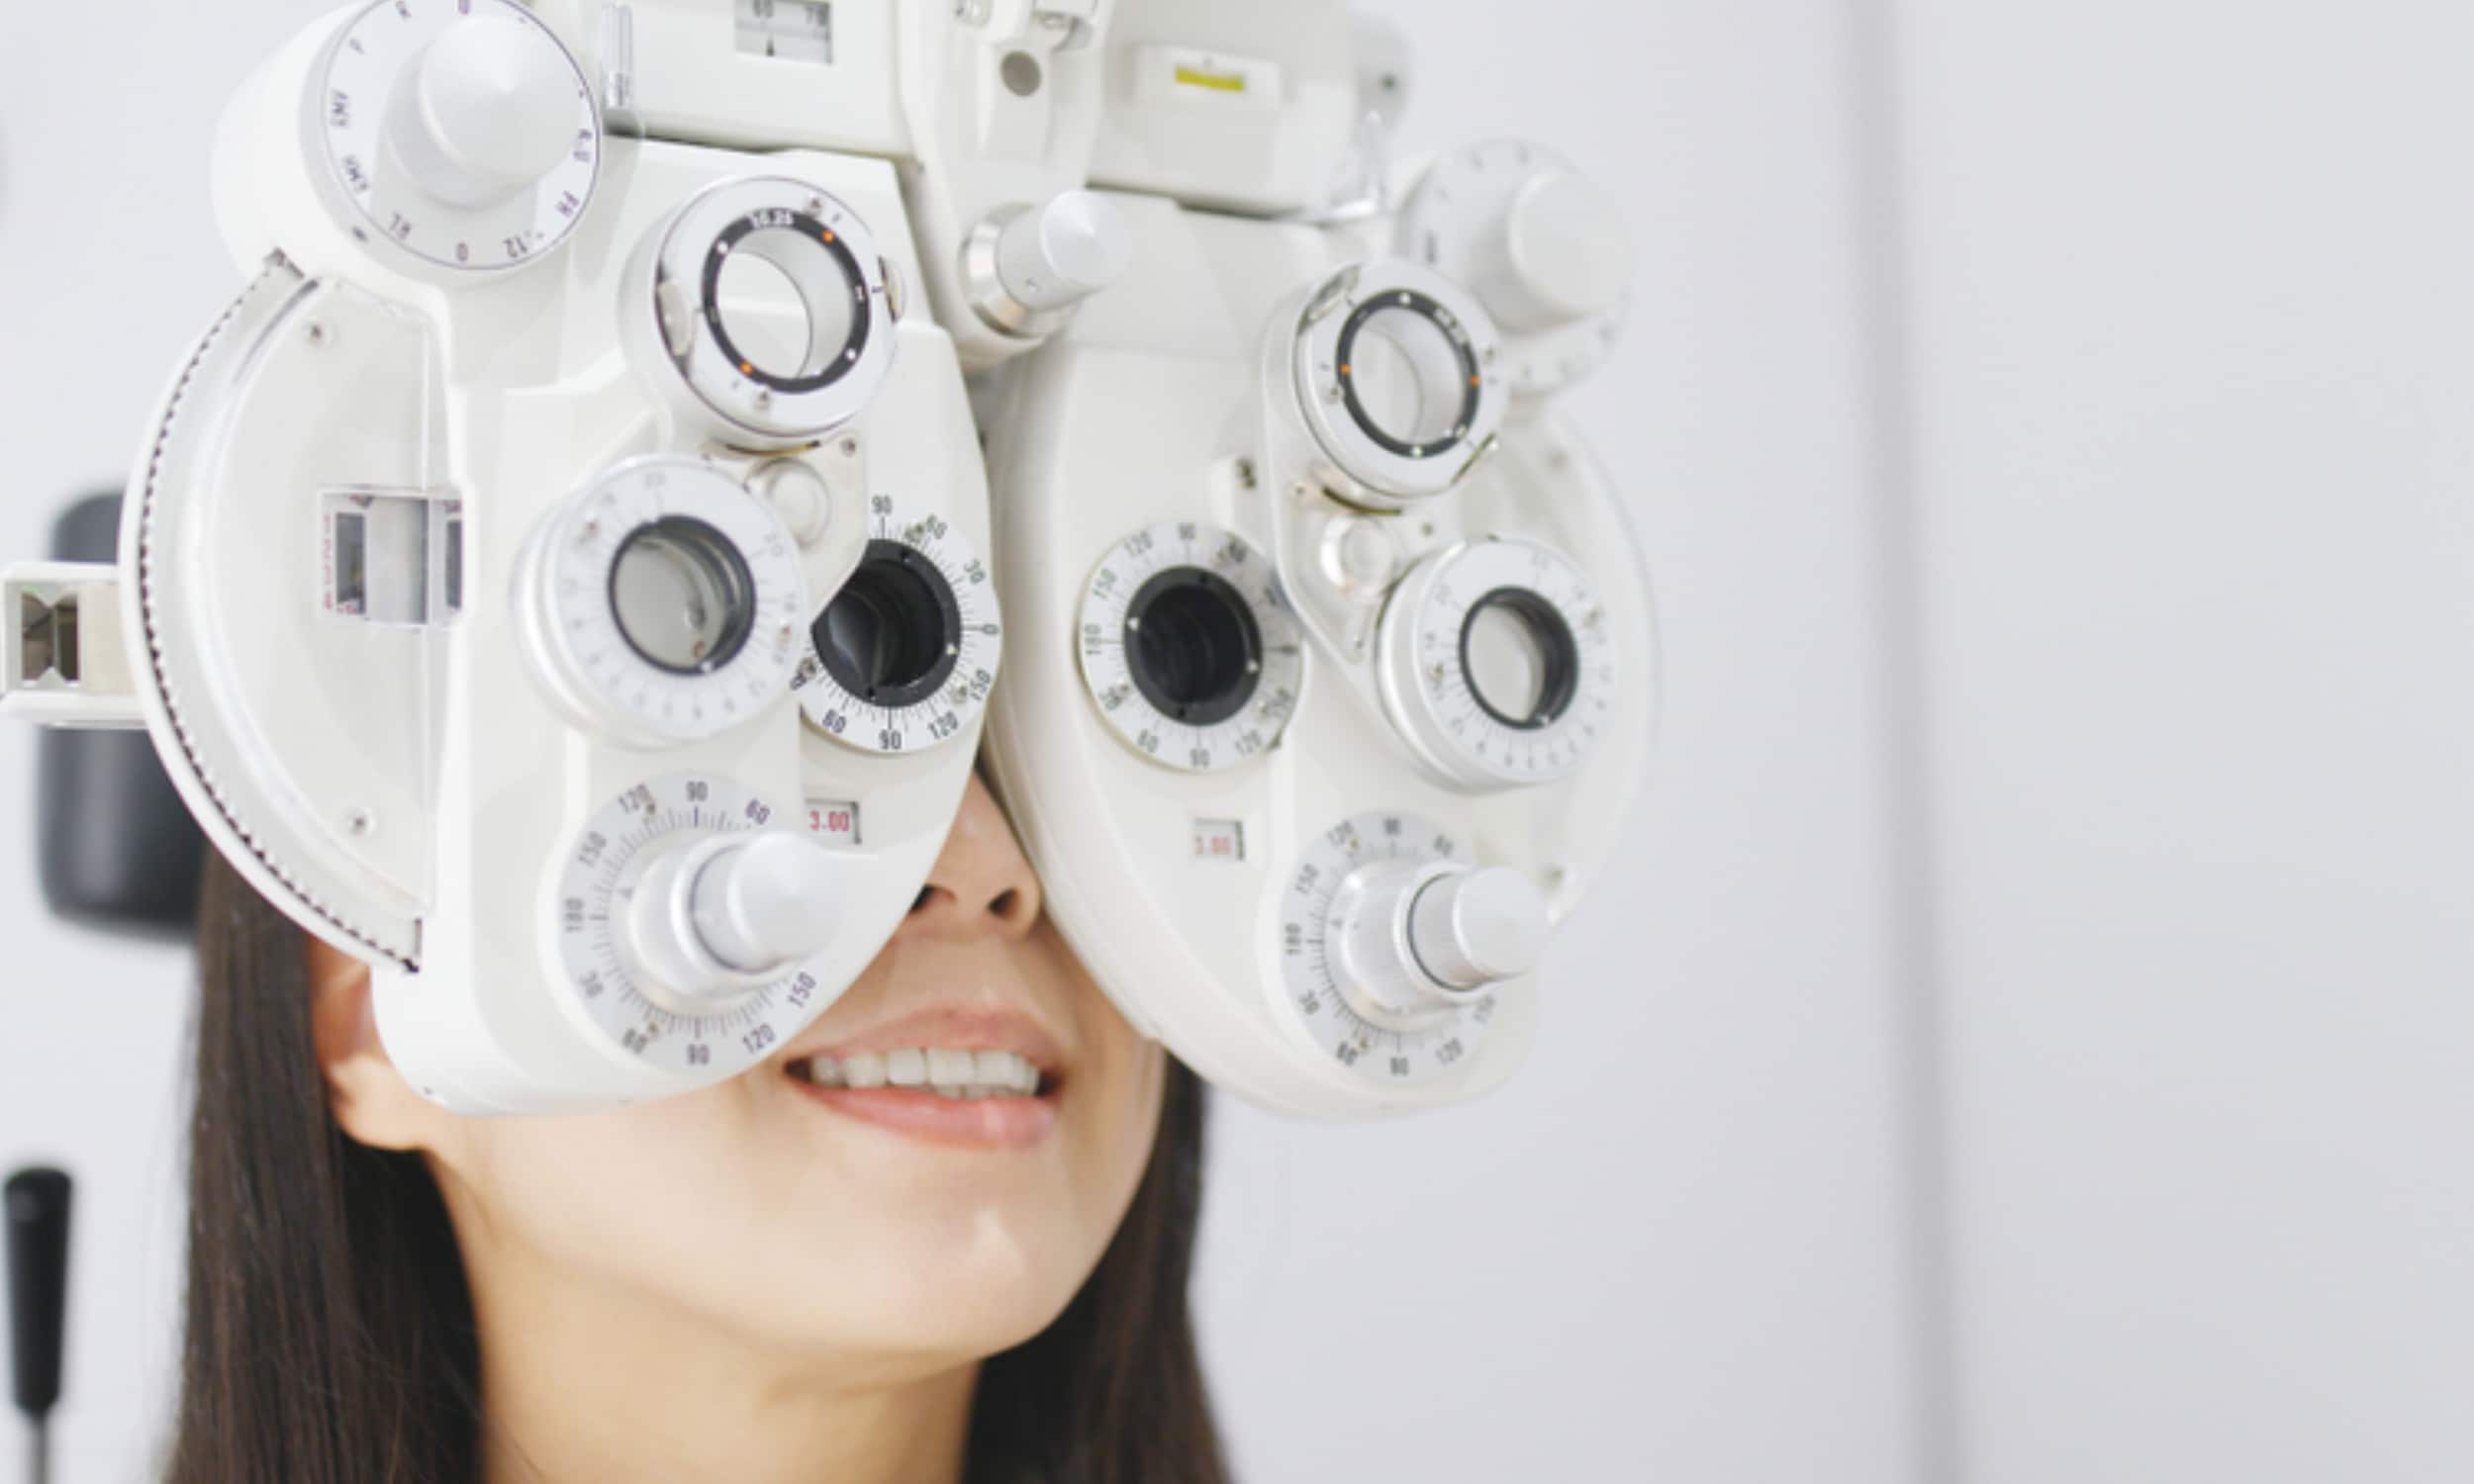 Woman has eyes up to eye doctor lens measuring machine.